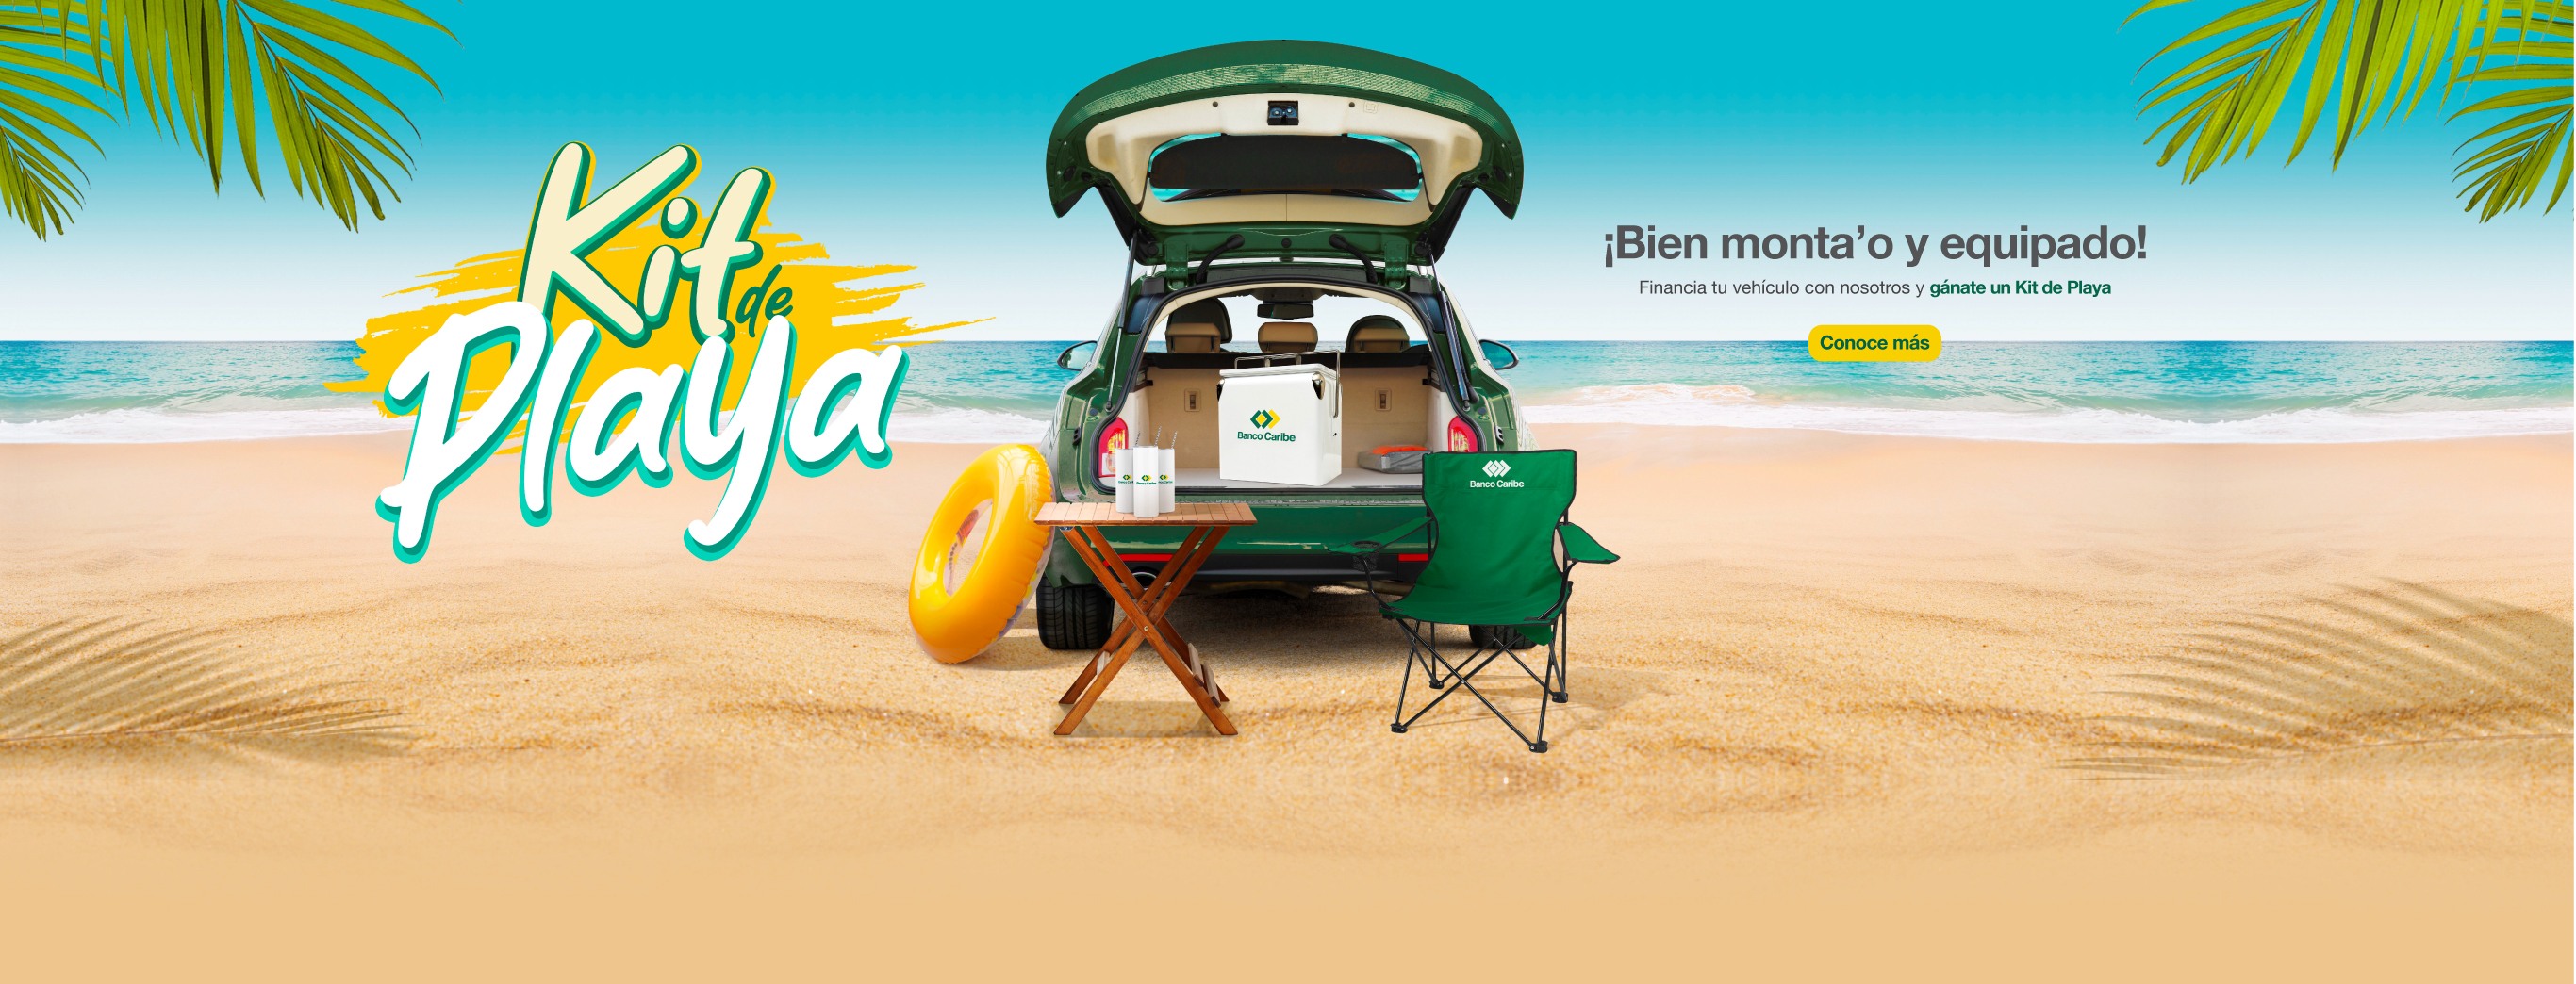 Kit de Playa Promo Vehículo